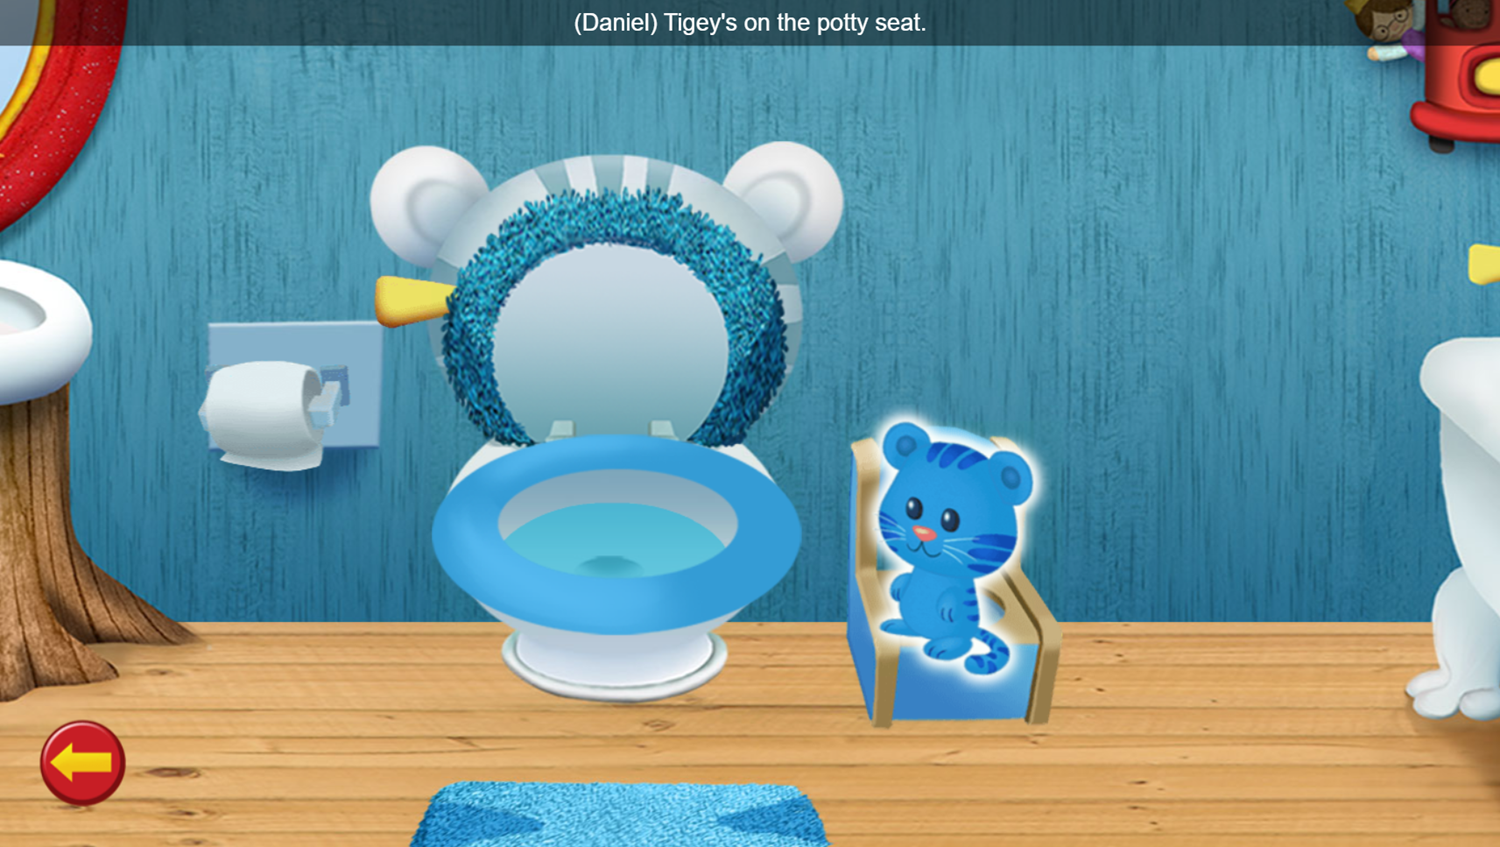 Daniel Tiger's Neighborhood In My Bathroom Game Tigey's Potty Screenshot.